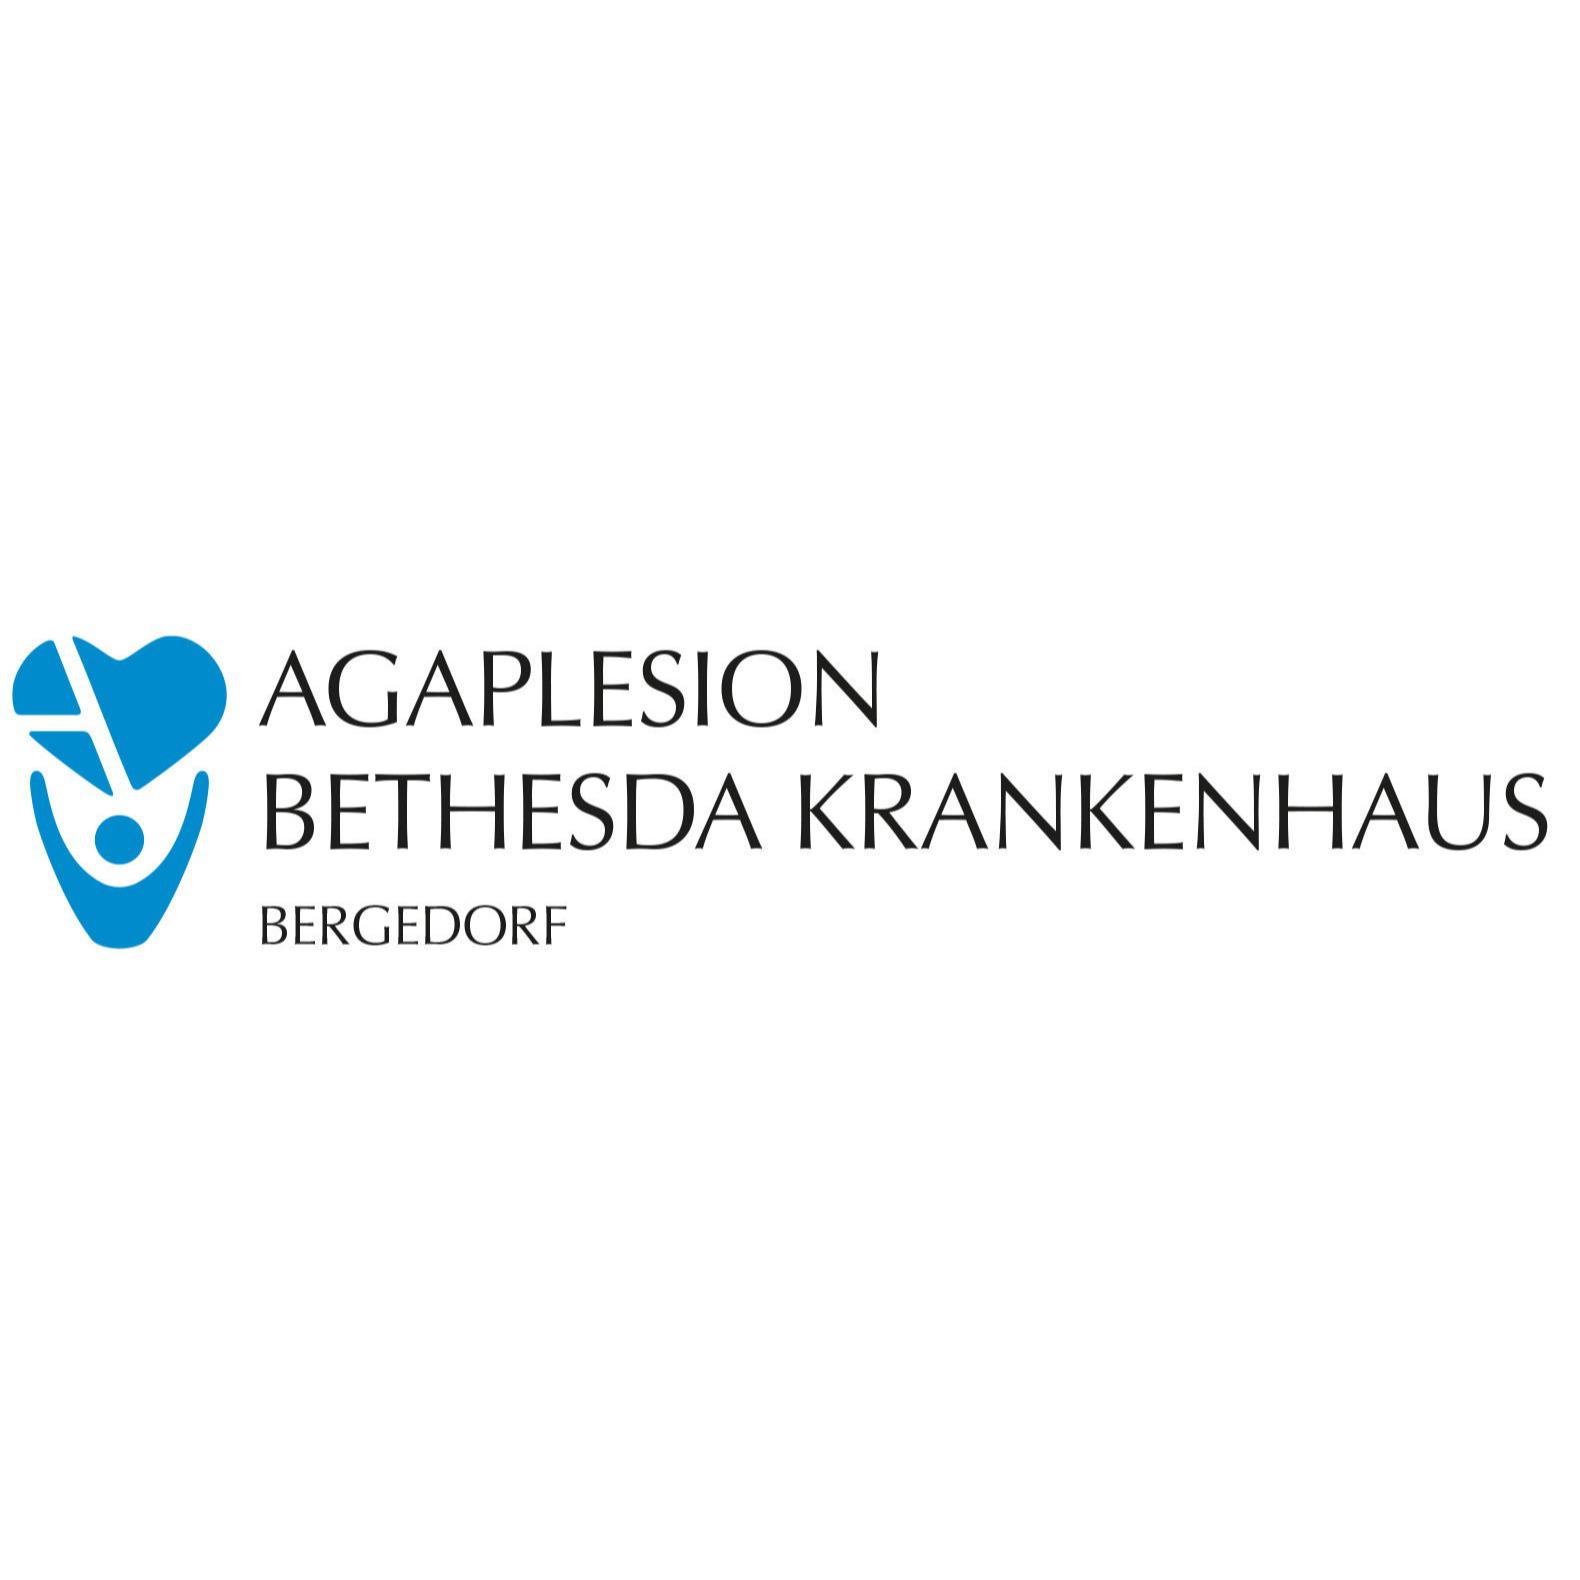 AGAPLESION BETHESDA KRANKENHAUS BERGEDORF Logo